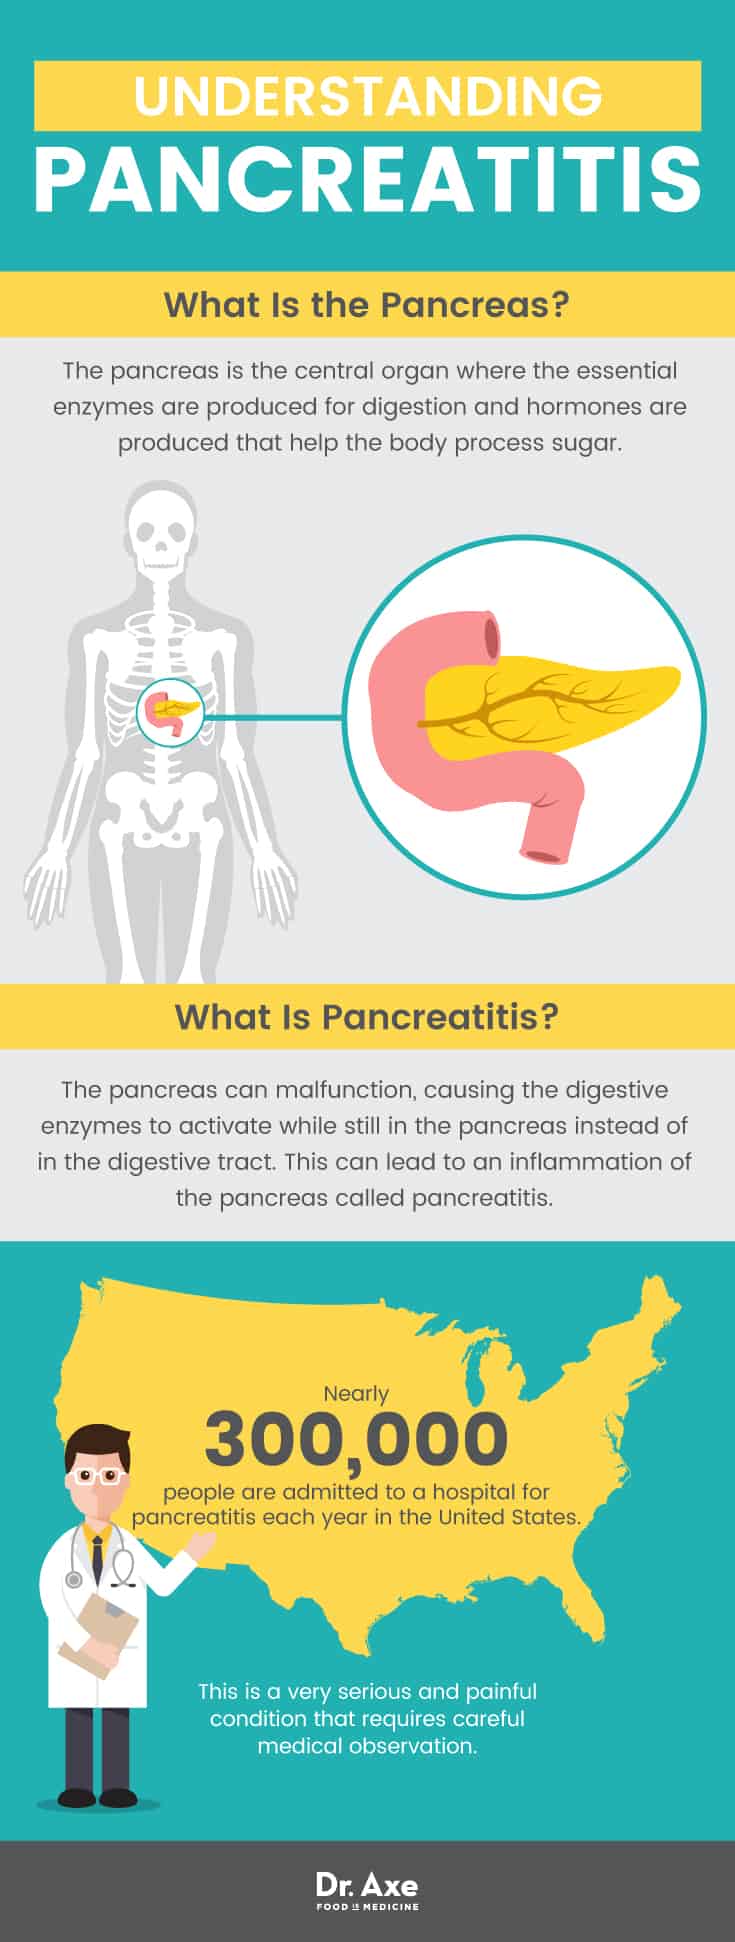 Pancreatitis diet: understanding pancreatitis - Dr. Axe